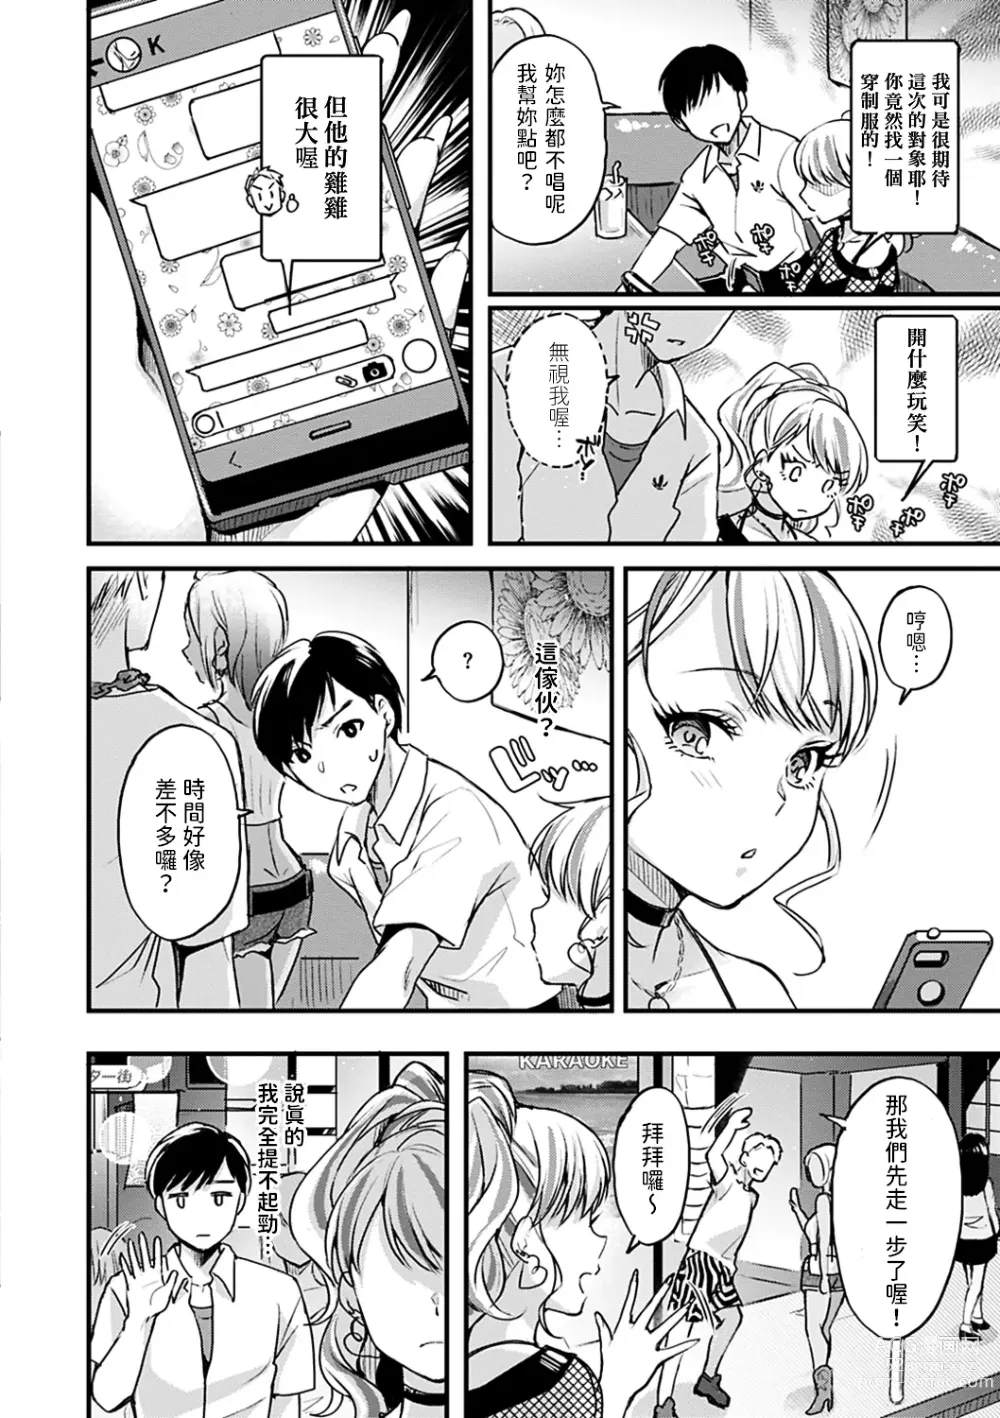 Page 4 of manga Deka Chin Shika Katan!